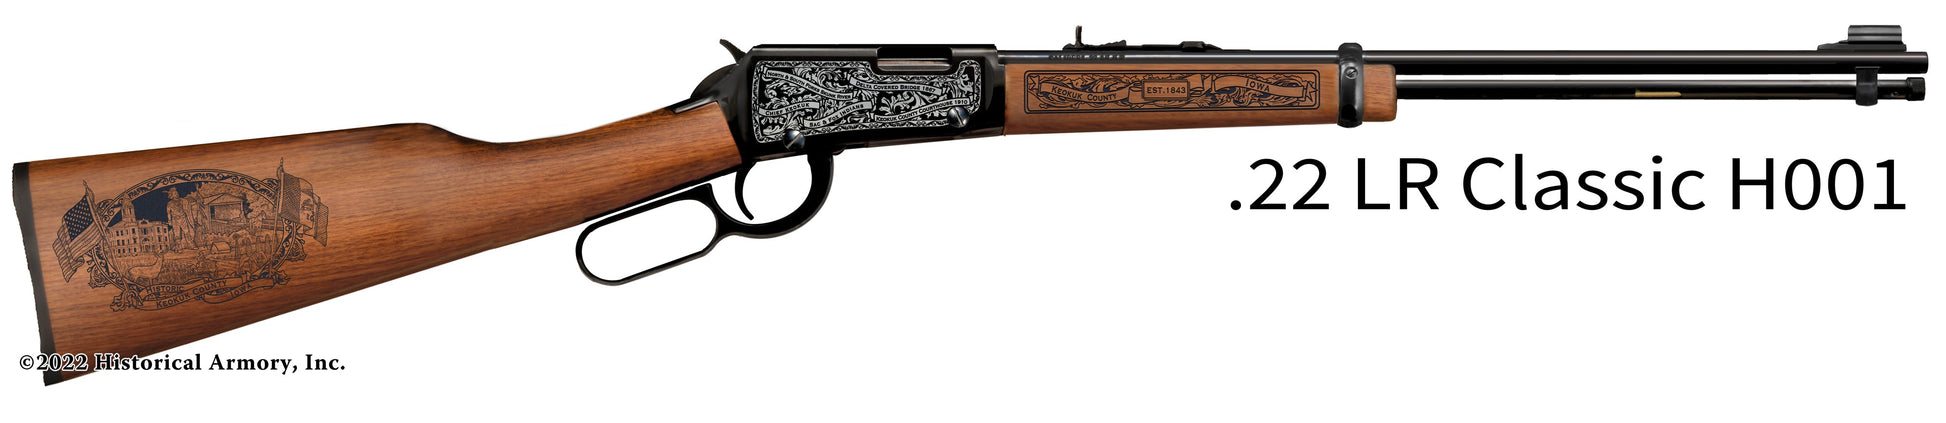 Keokuk County Iowa Engraved Henry H001 Rifle